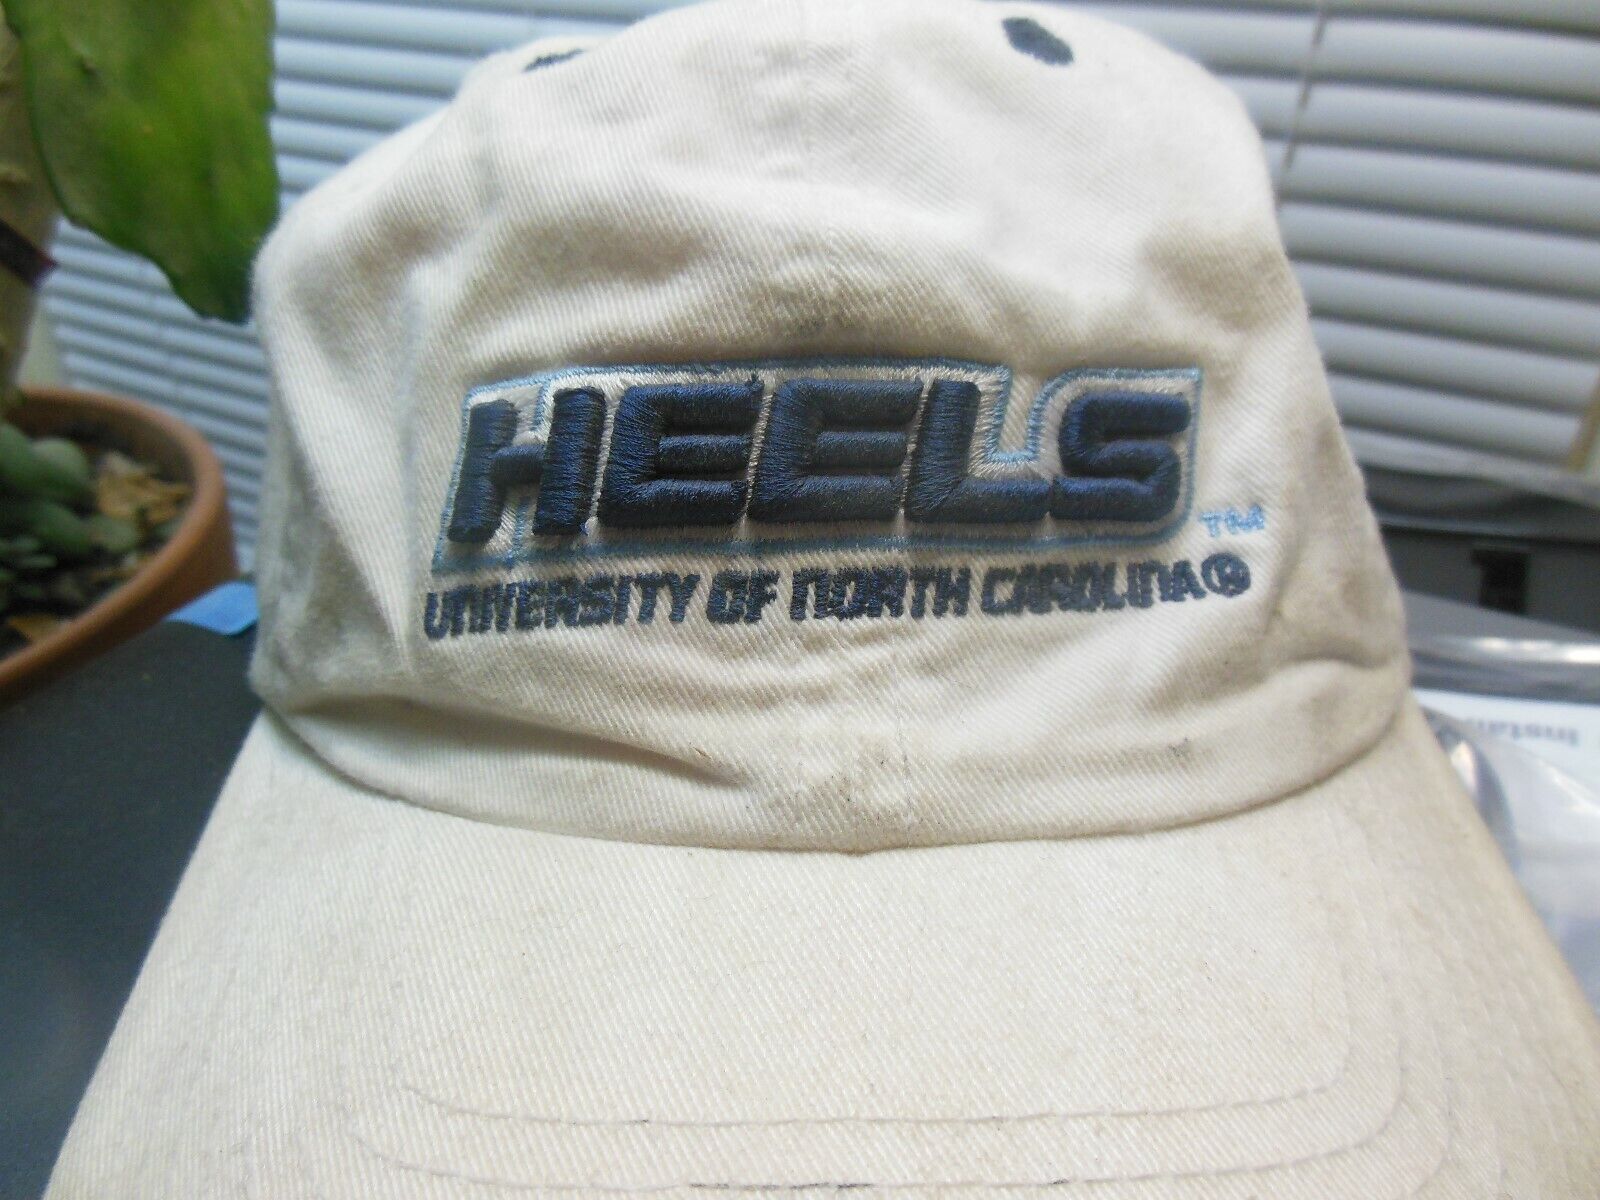 university of north Carolina HEELS ball cap